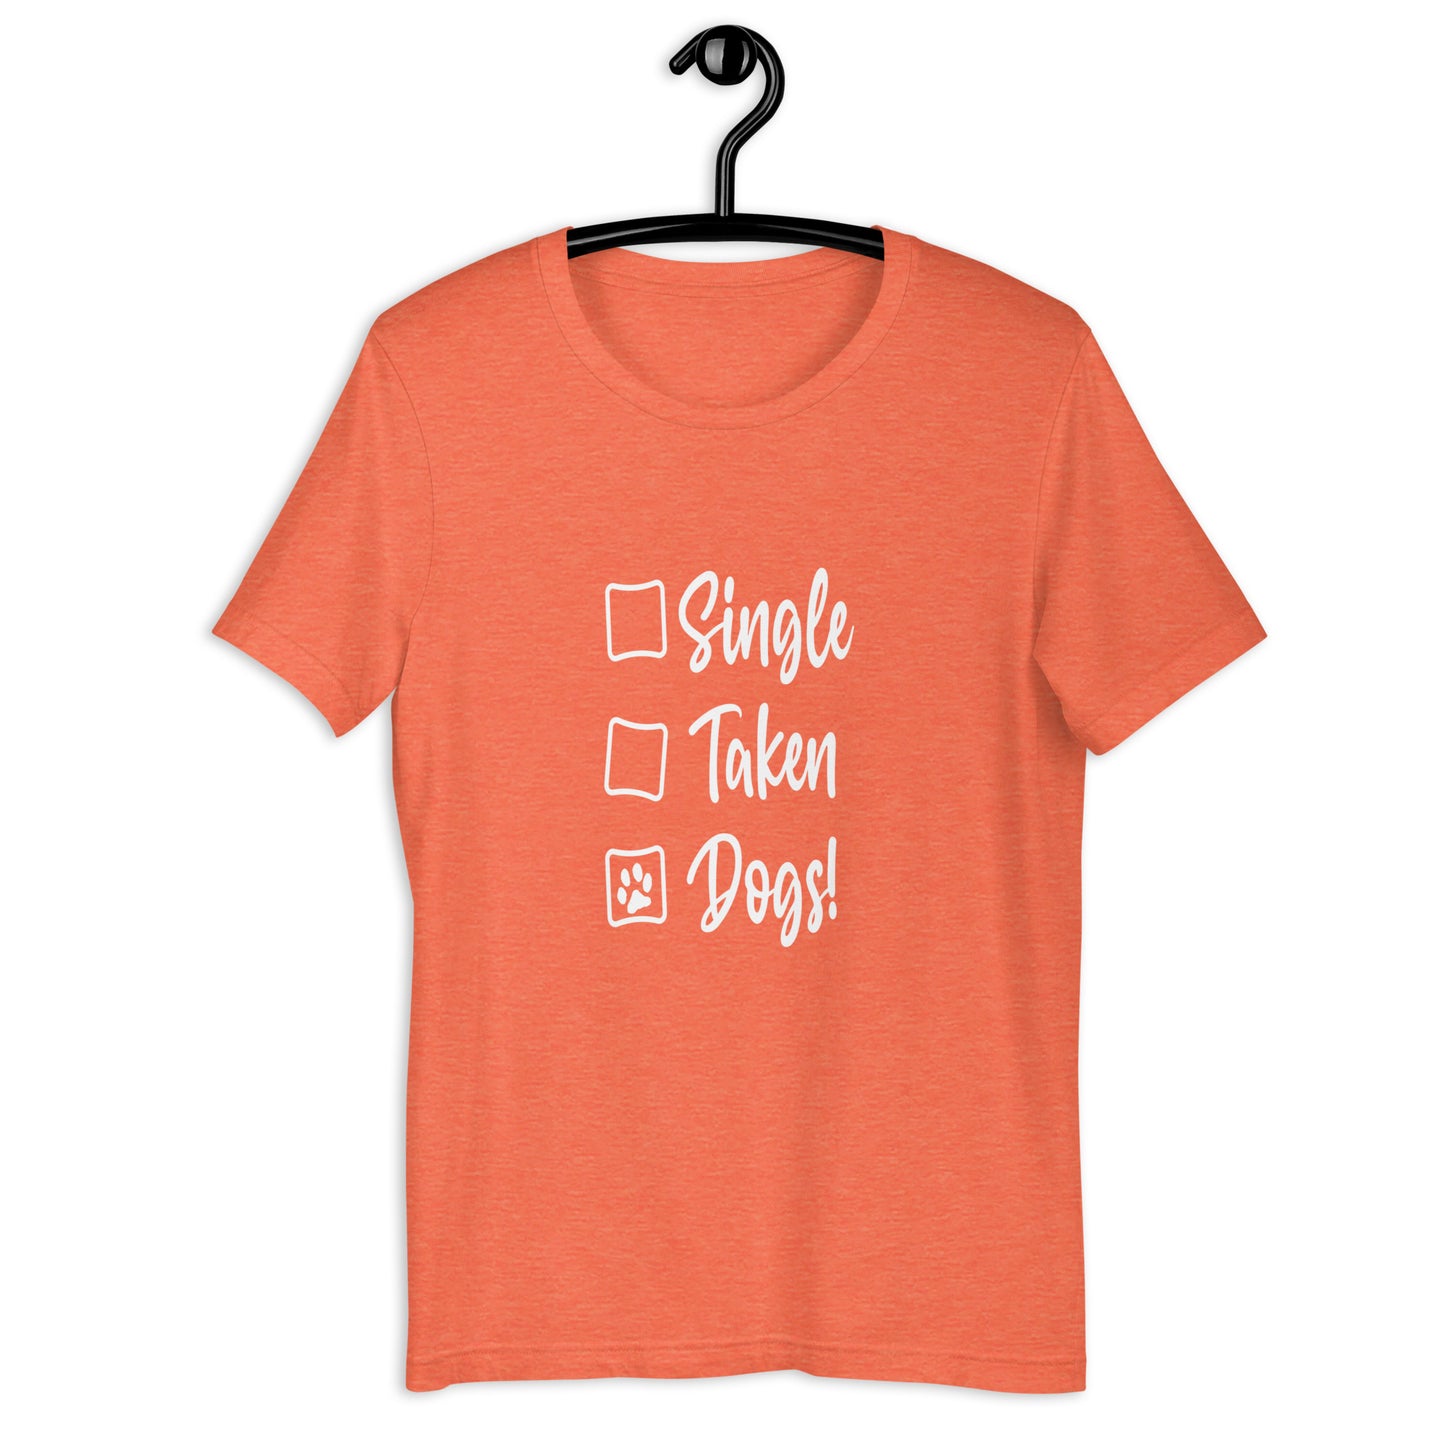 SINGLE, TAKEN, DOGS - Unisex t-shirt